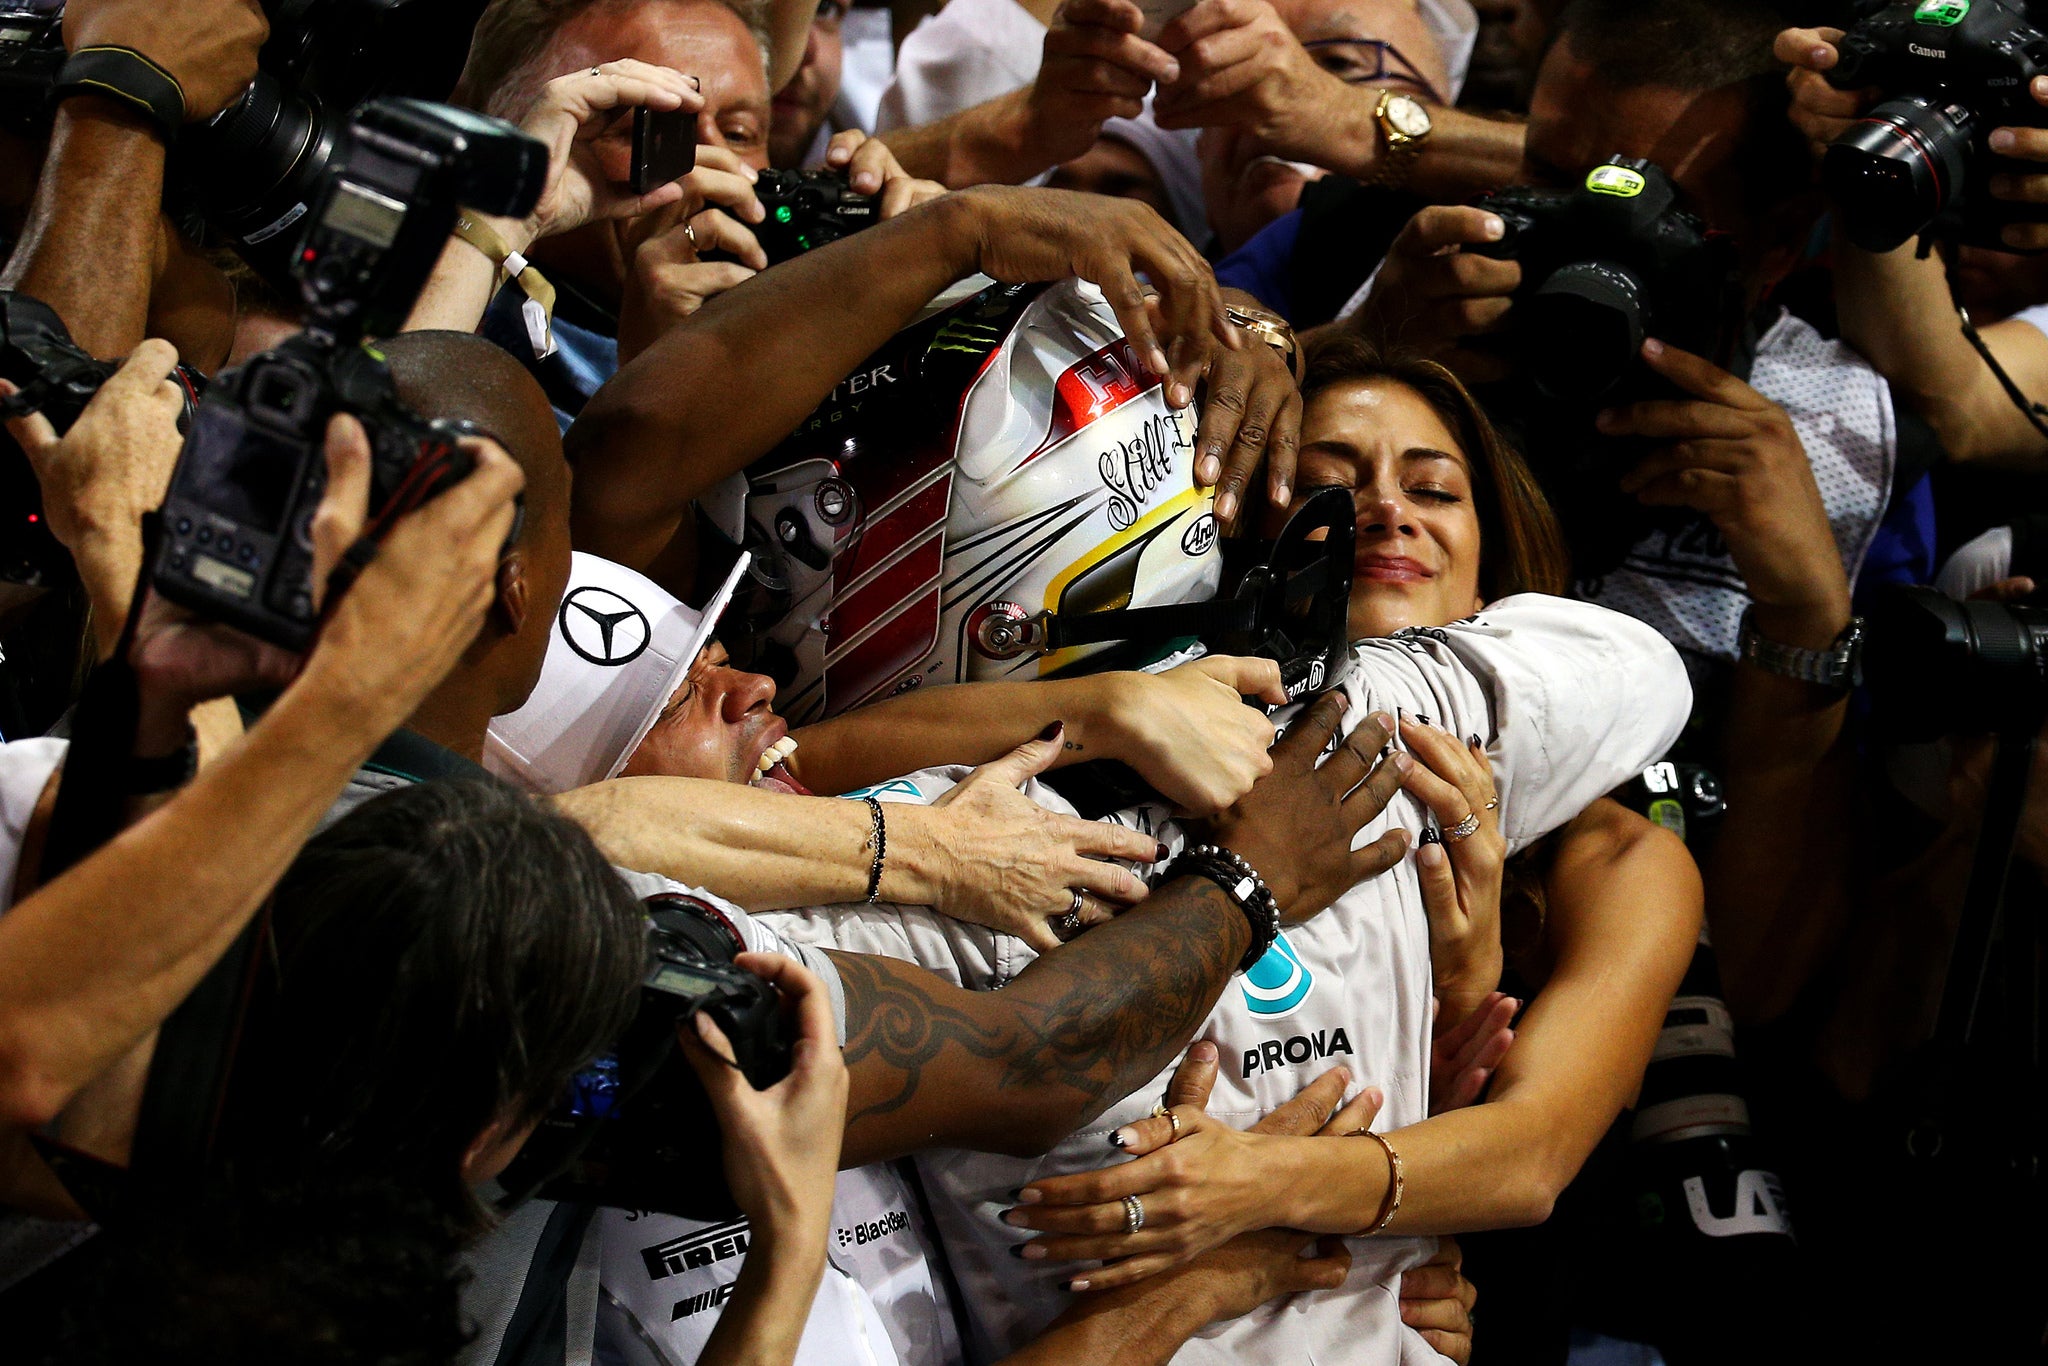 Lewis Hamilton celebrates winning the Abu Dhabi Grand Prix and the 2014 Drivers' Championship